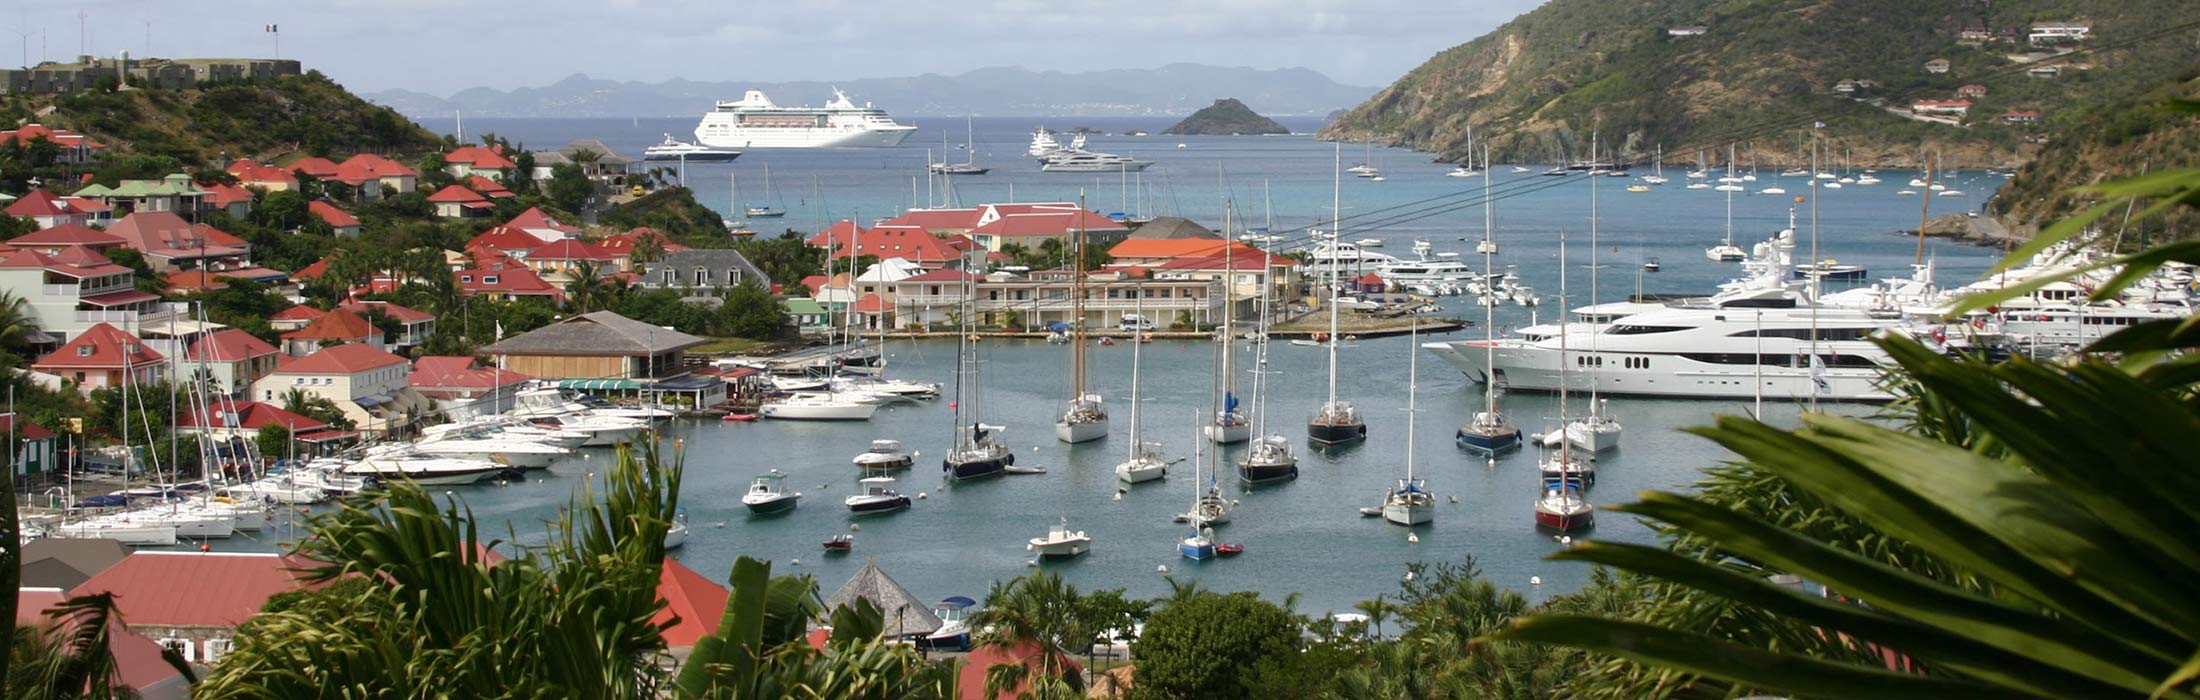 top yacht charter destinations carribean bahamas carribean st barts main slider 1